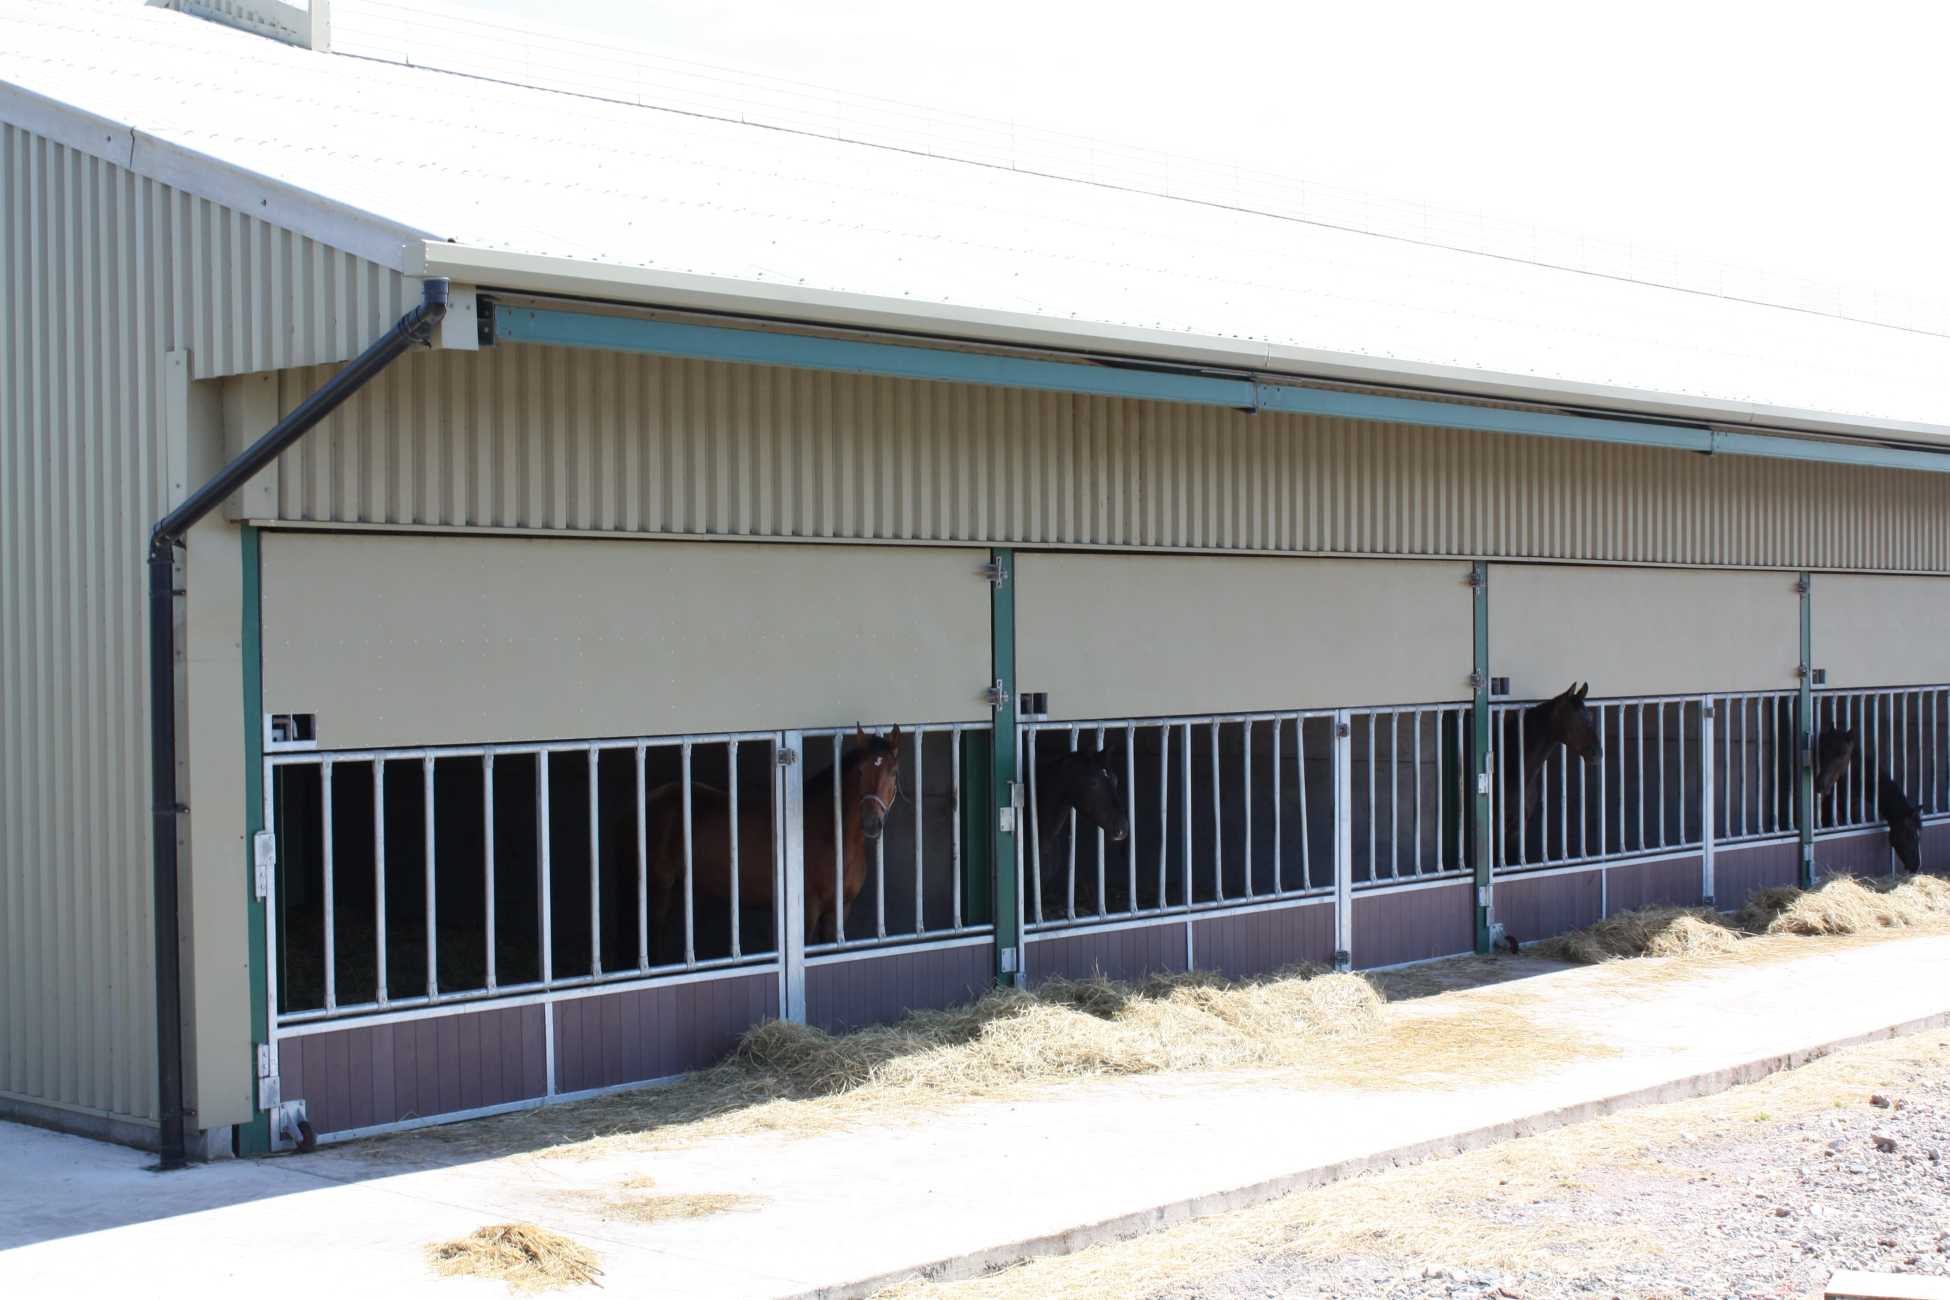 Equestrian Buildings